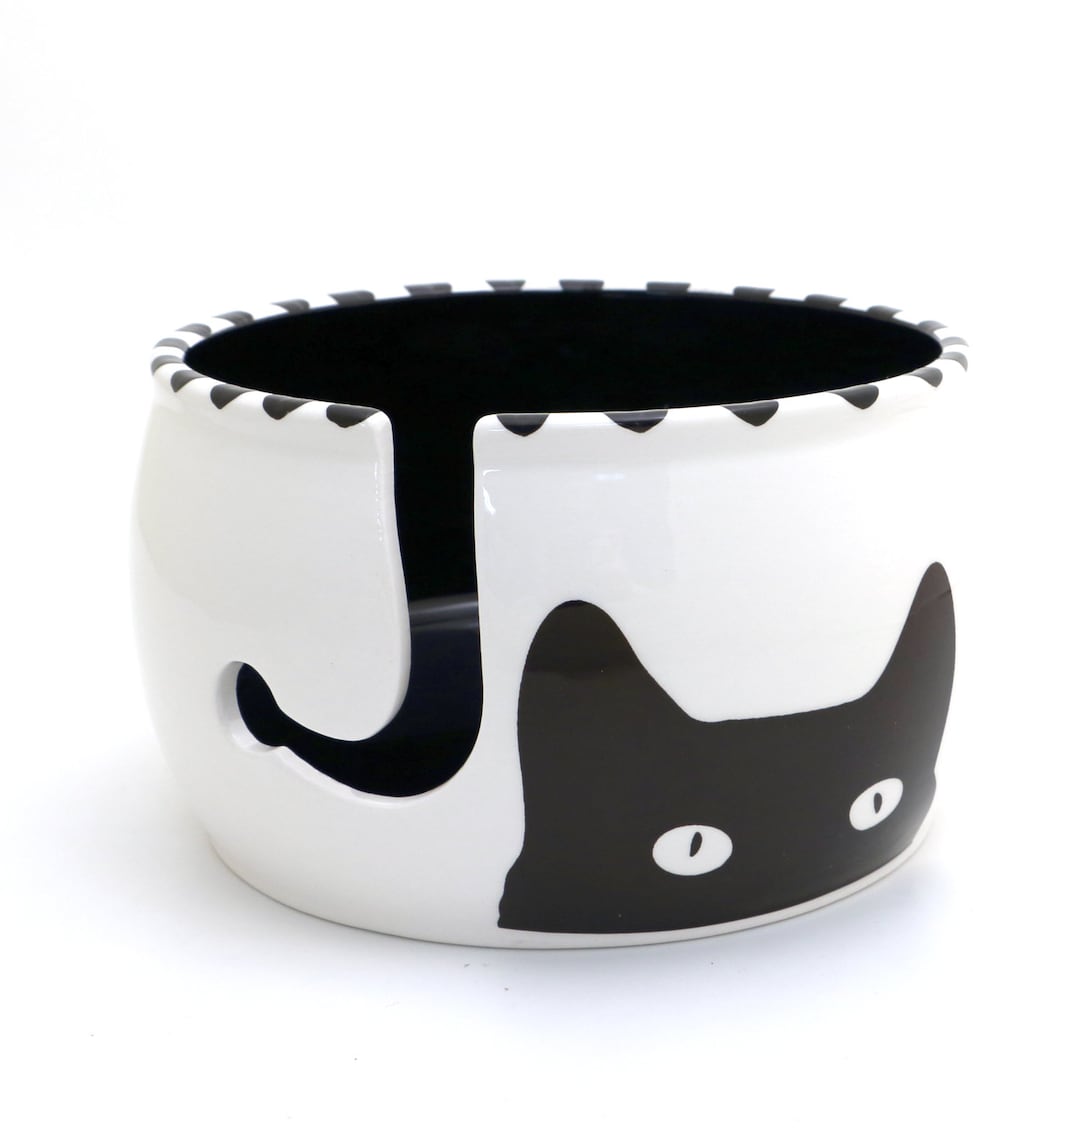 Calico Cat Yarn Bowl -   Ceramic yarn bowl, Yarn bowl, Knitting bowl